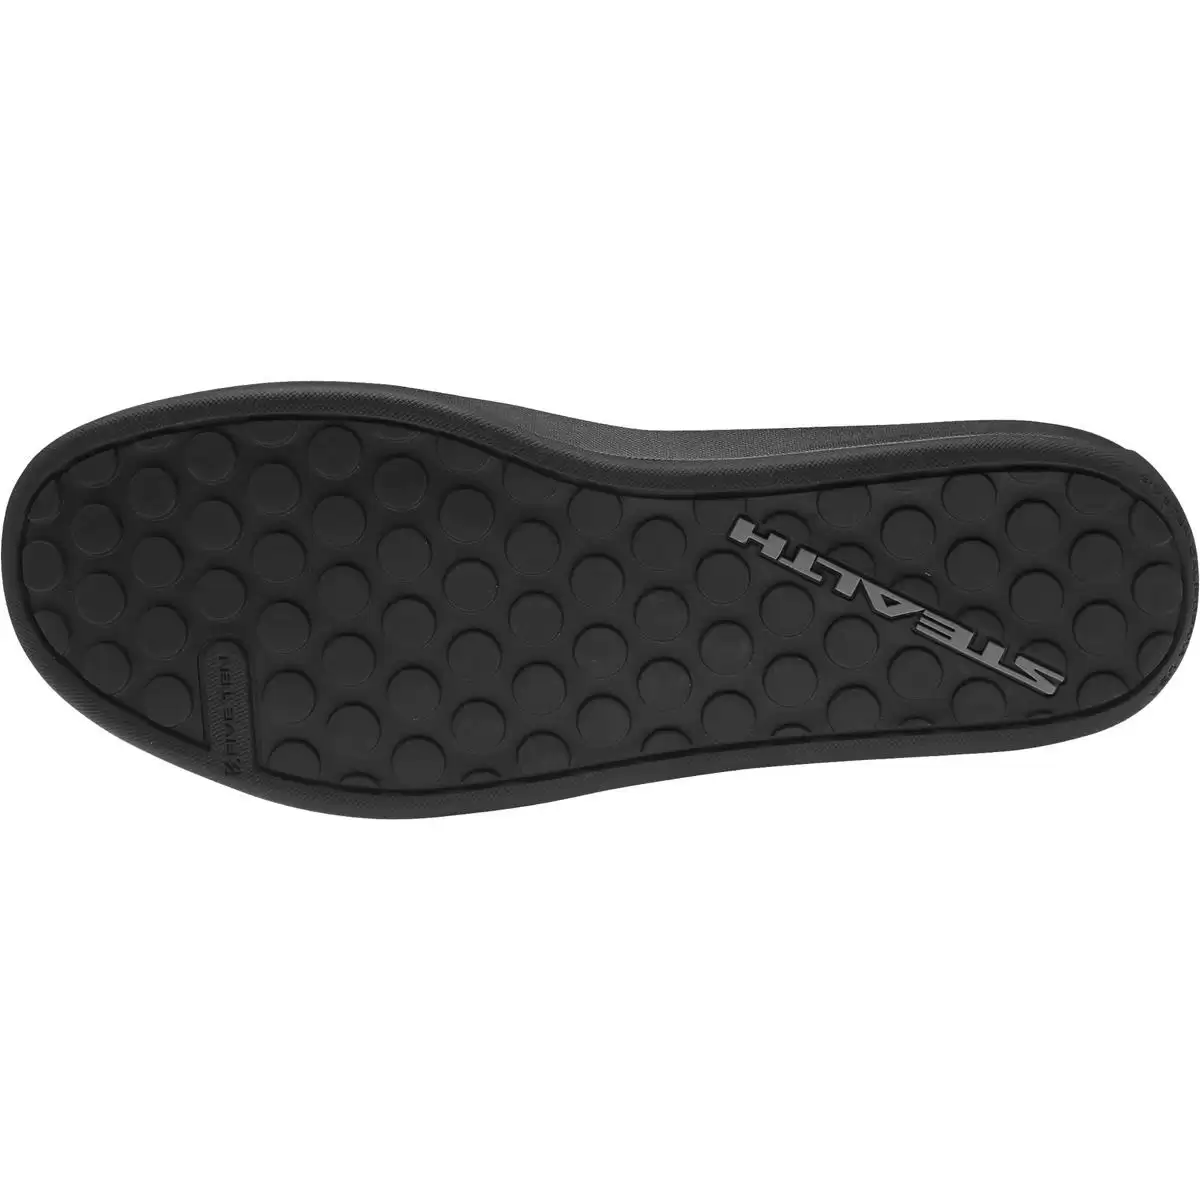 Zapatillas MTB Freerider Pro Primeblue Negro/Amarillo Talla 46,5 #4